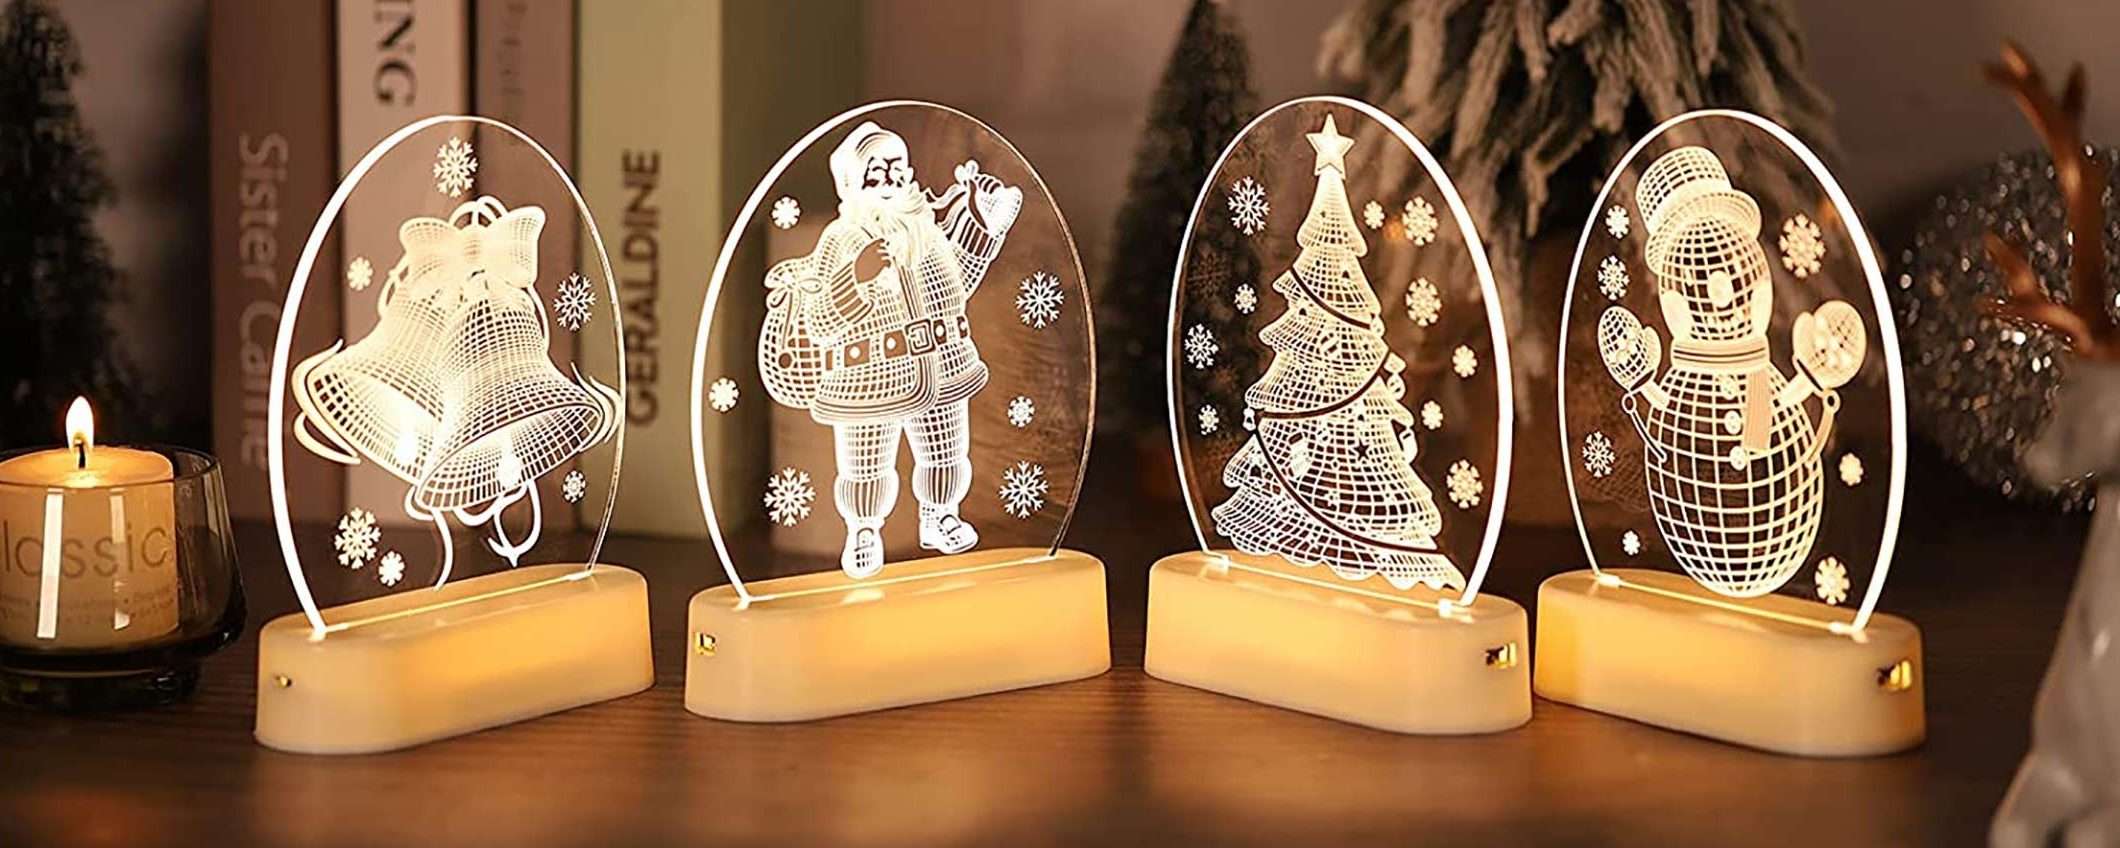 Idea regalo per Natale (9,99€): lampada LED 3D